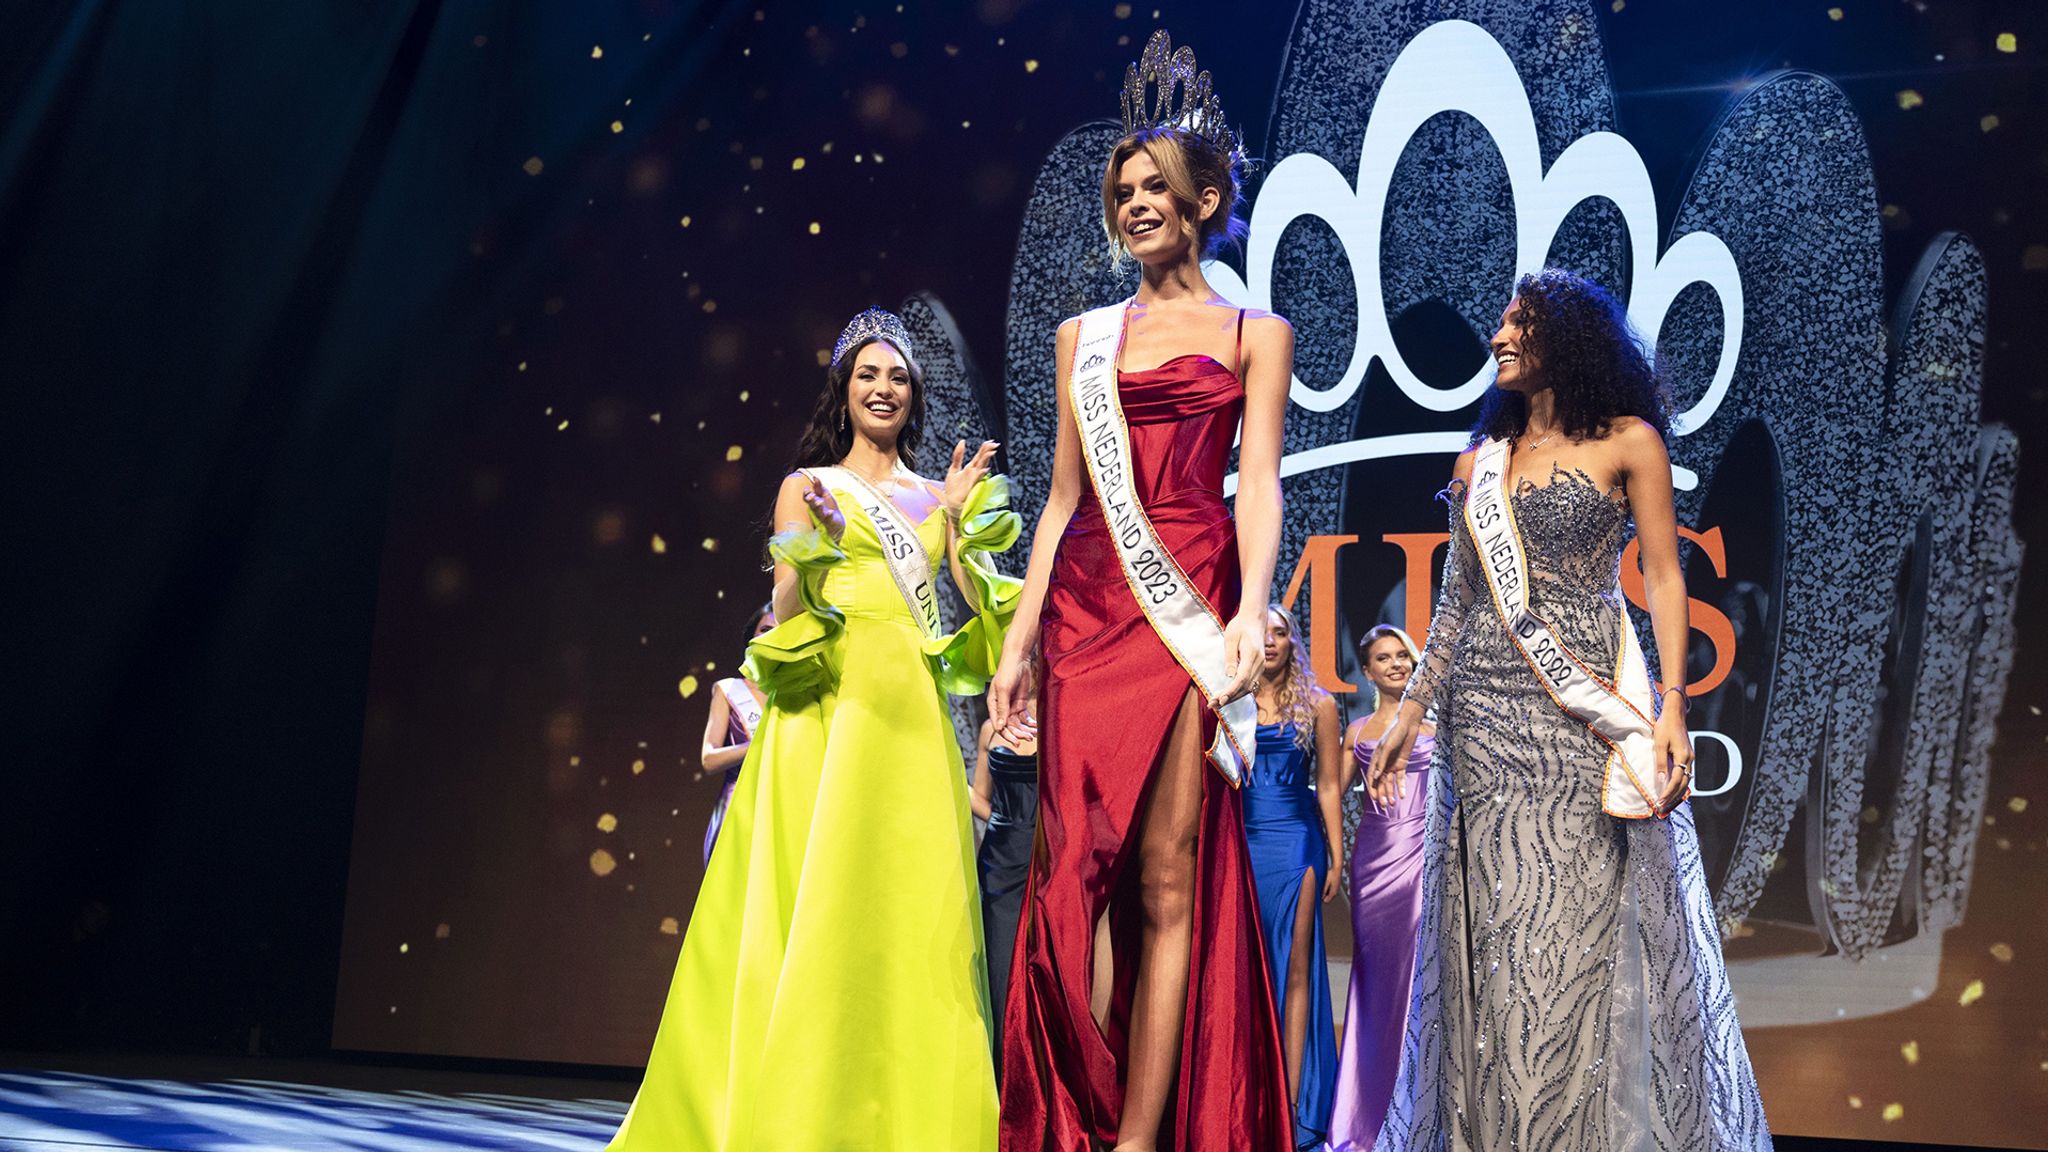 Rikkie Valerie Kolle Transgender woman wins Miss Netherlands for the